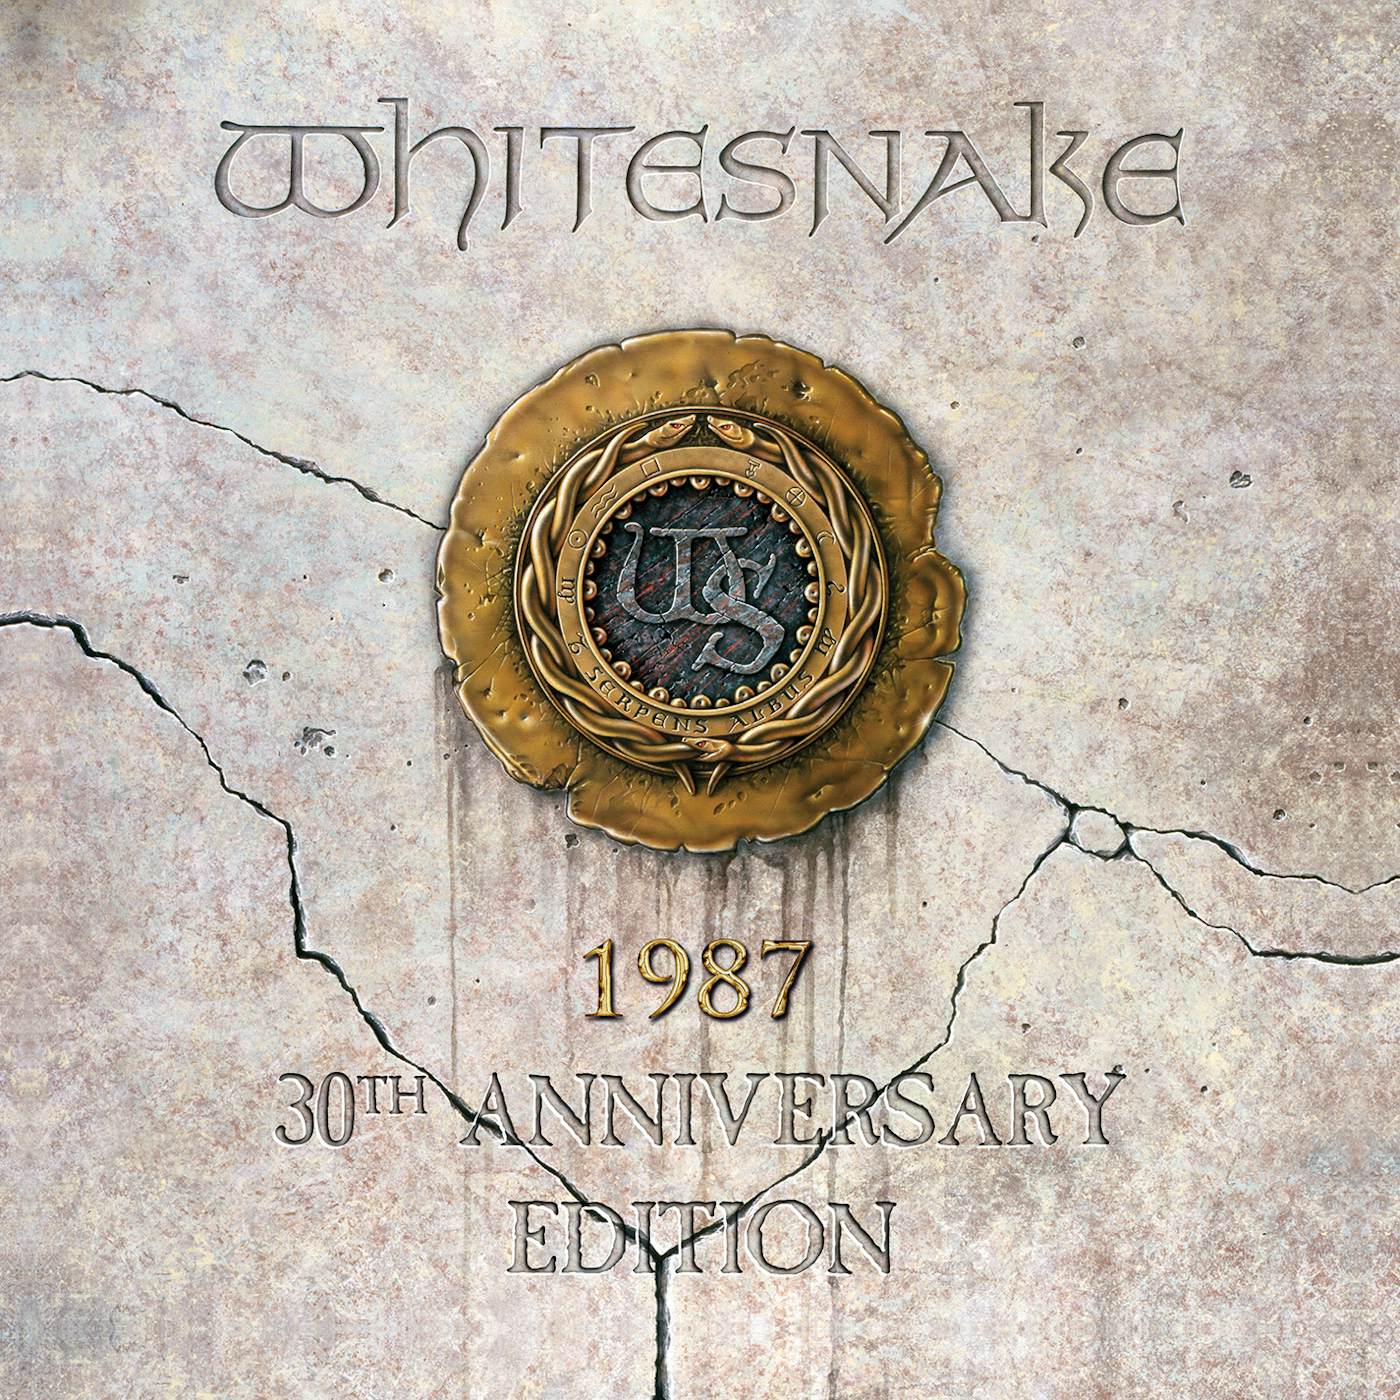 WHITESNAKE (30TH ANNIVERSARY EDITION) CD